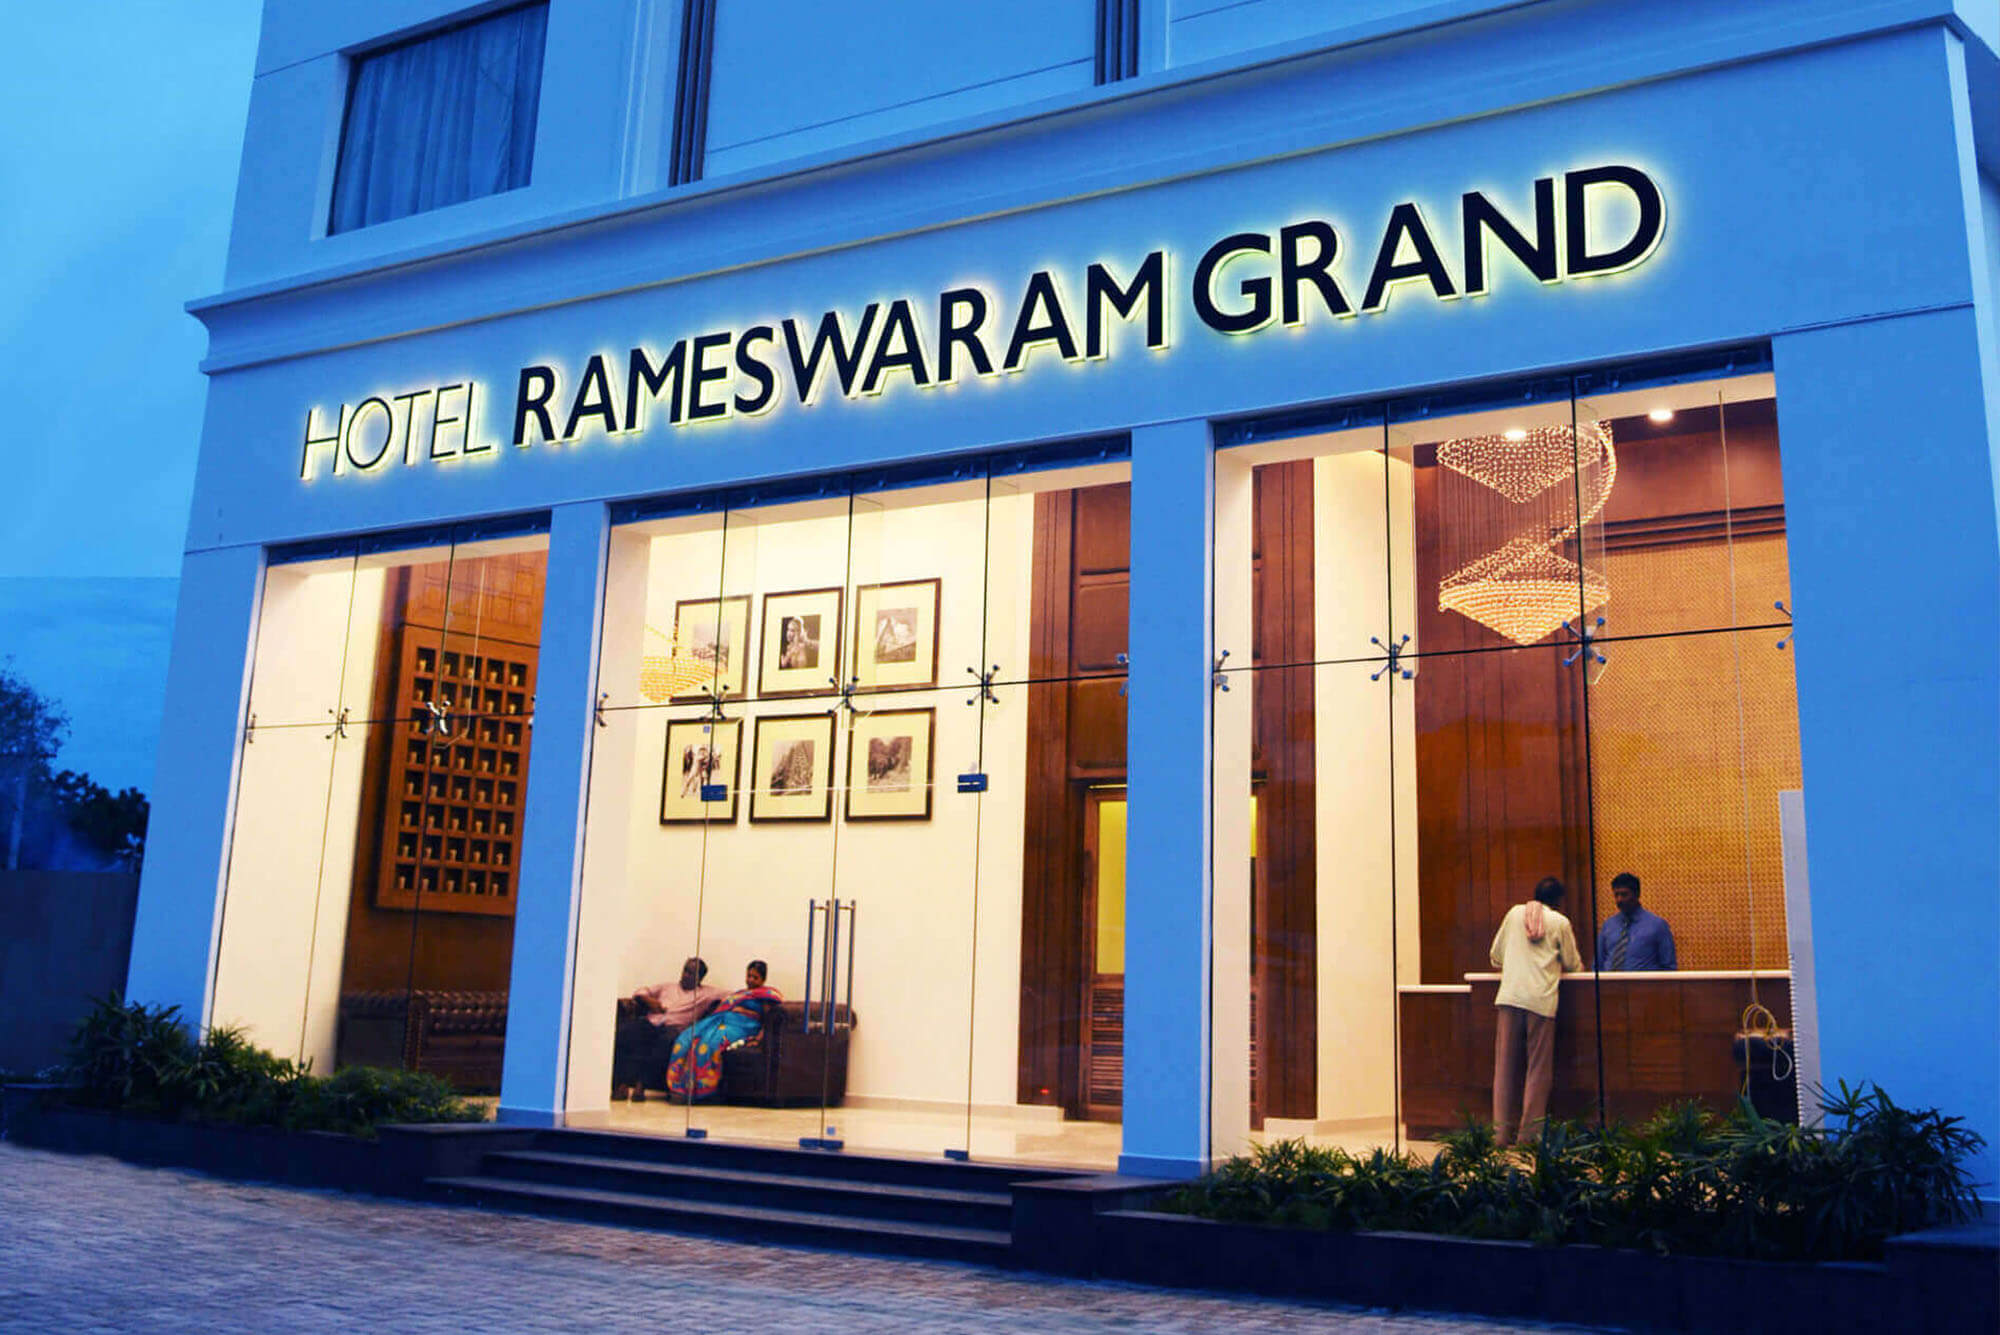 Hotel-Rameswaram-Grand-Side-View